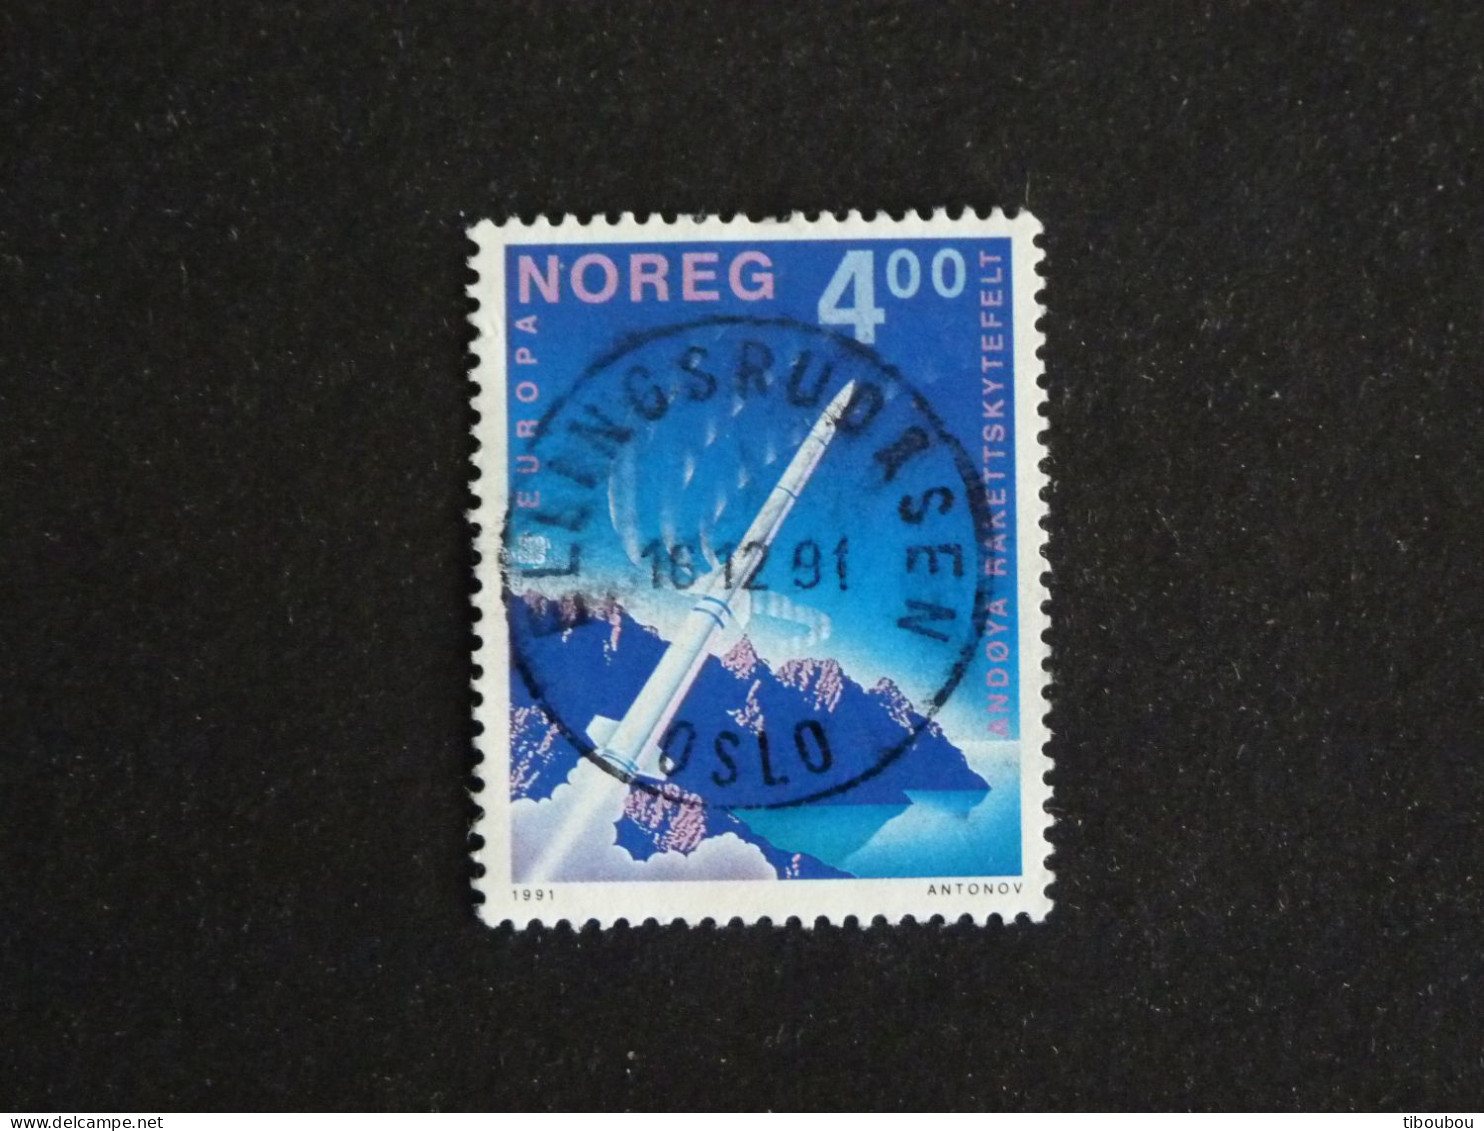 NORVEGE NORWAY NORGE NOREG YT 1020 OBLITERE - EUROPA BASE LANCEMENT ANDÖYA FUSEE - Oblitérés